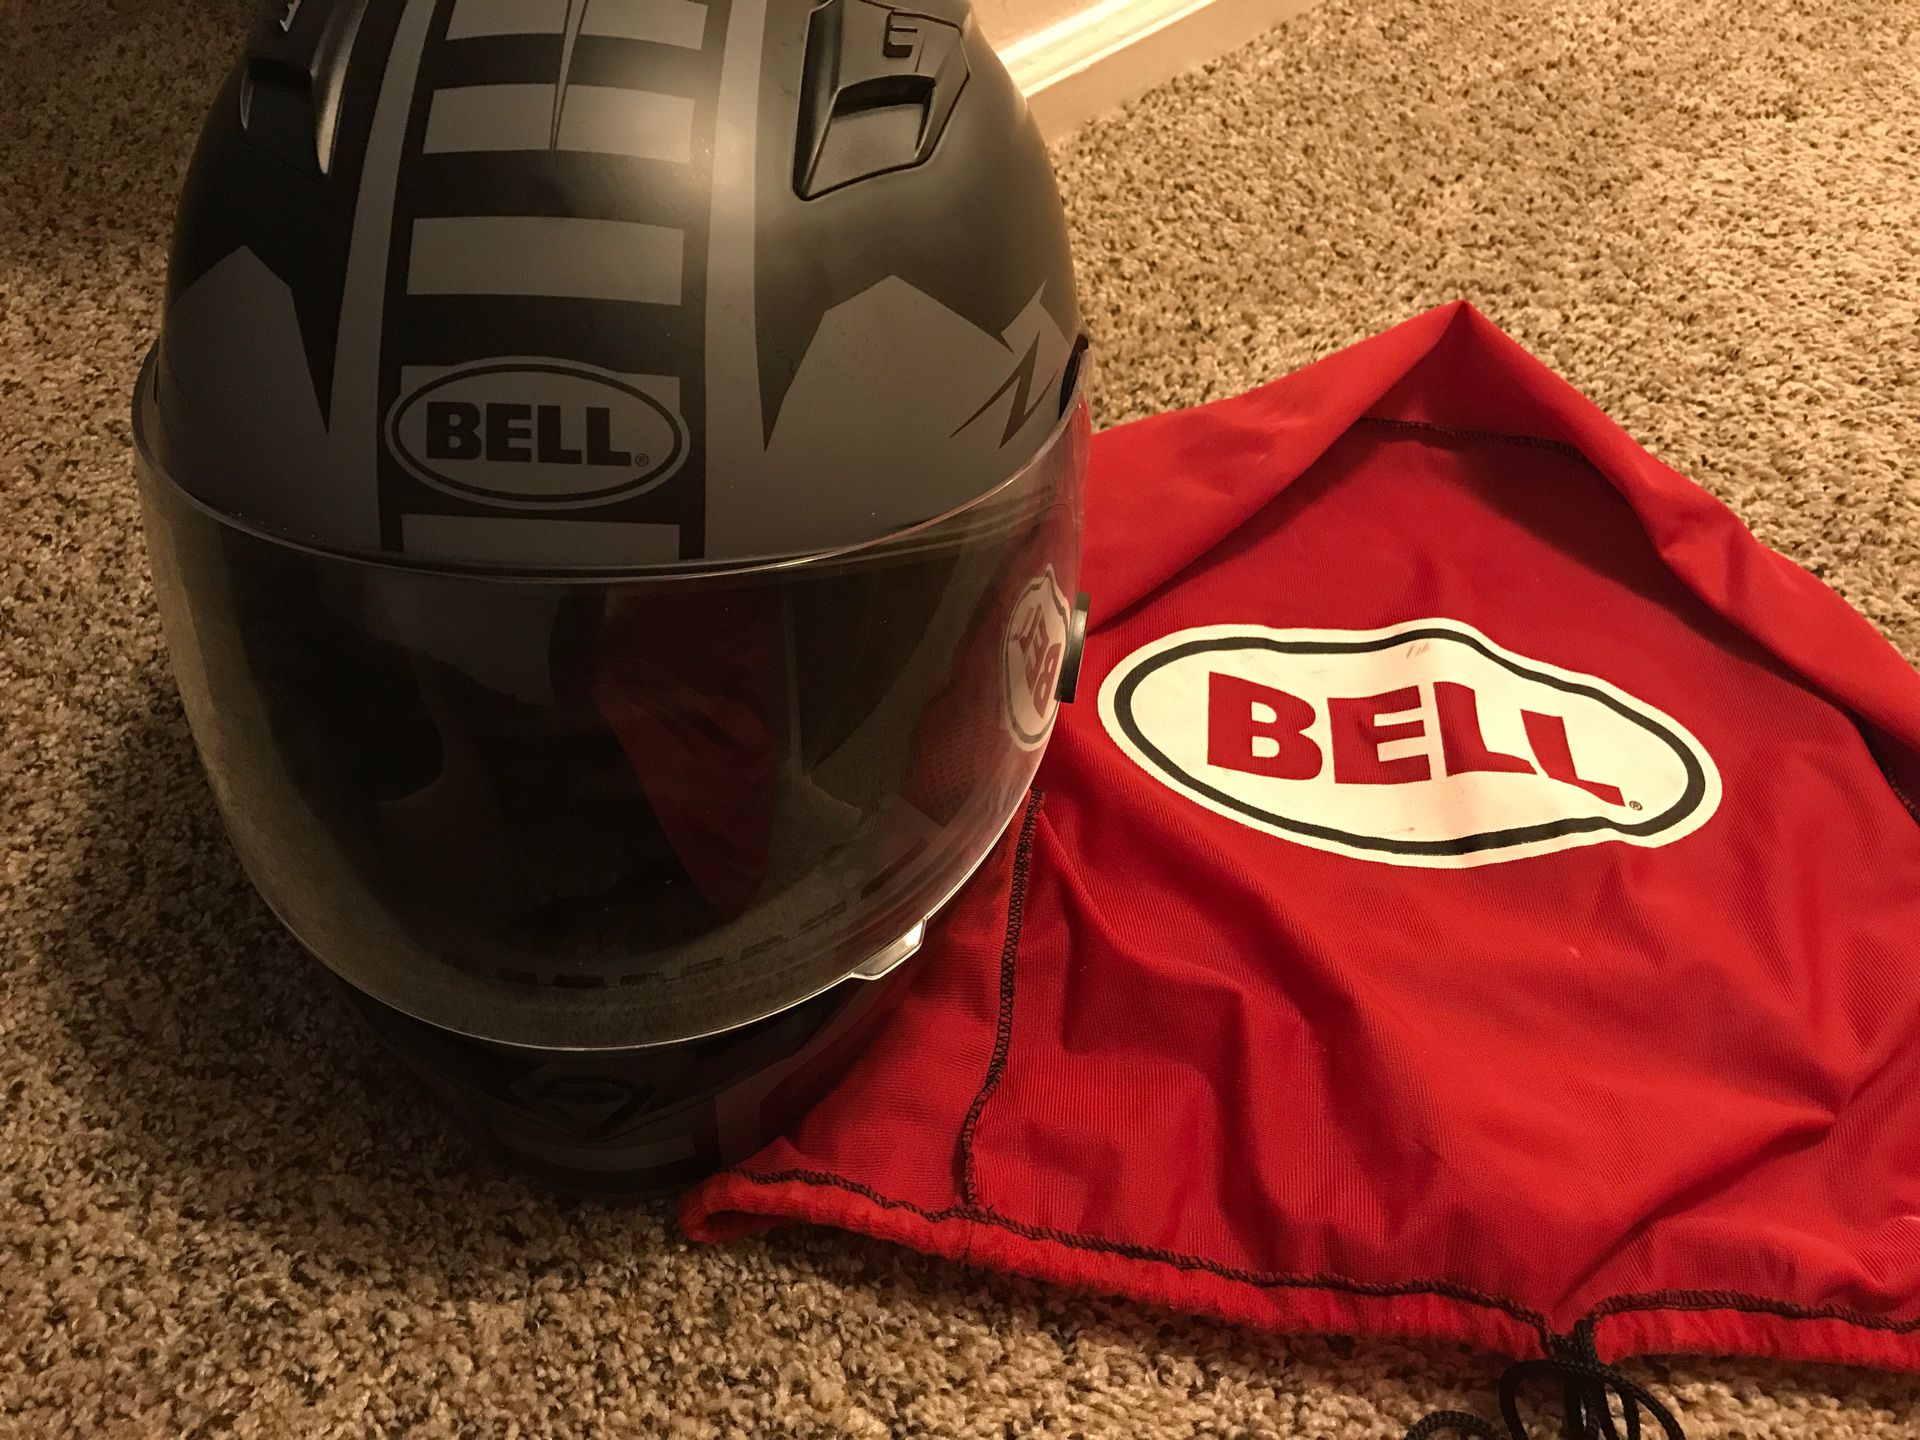 BELL Vehicle Helmet